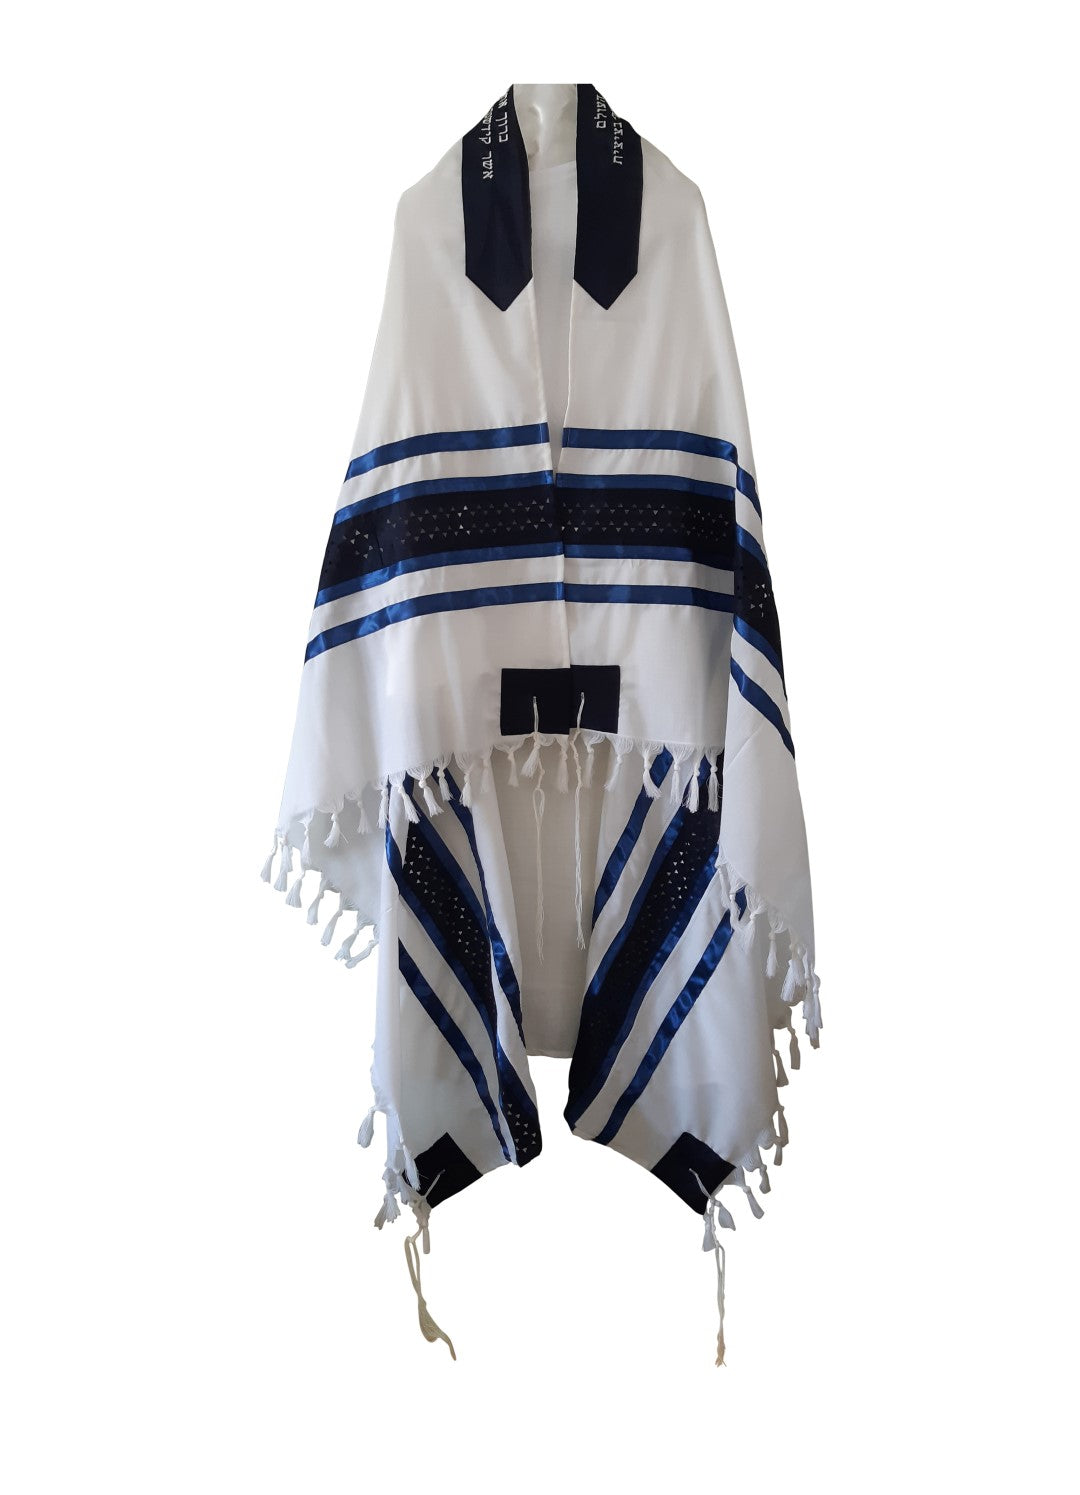 Exclusive Magen David wool Tallit - Full size Tzitzit Jewish prayer shawl, Bar Mitzvah Tallit from Israel, Wedding Tallit, Hebrew Prayer Shawl